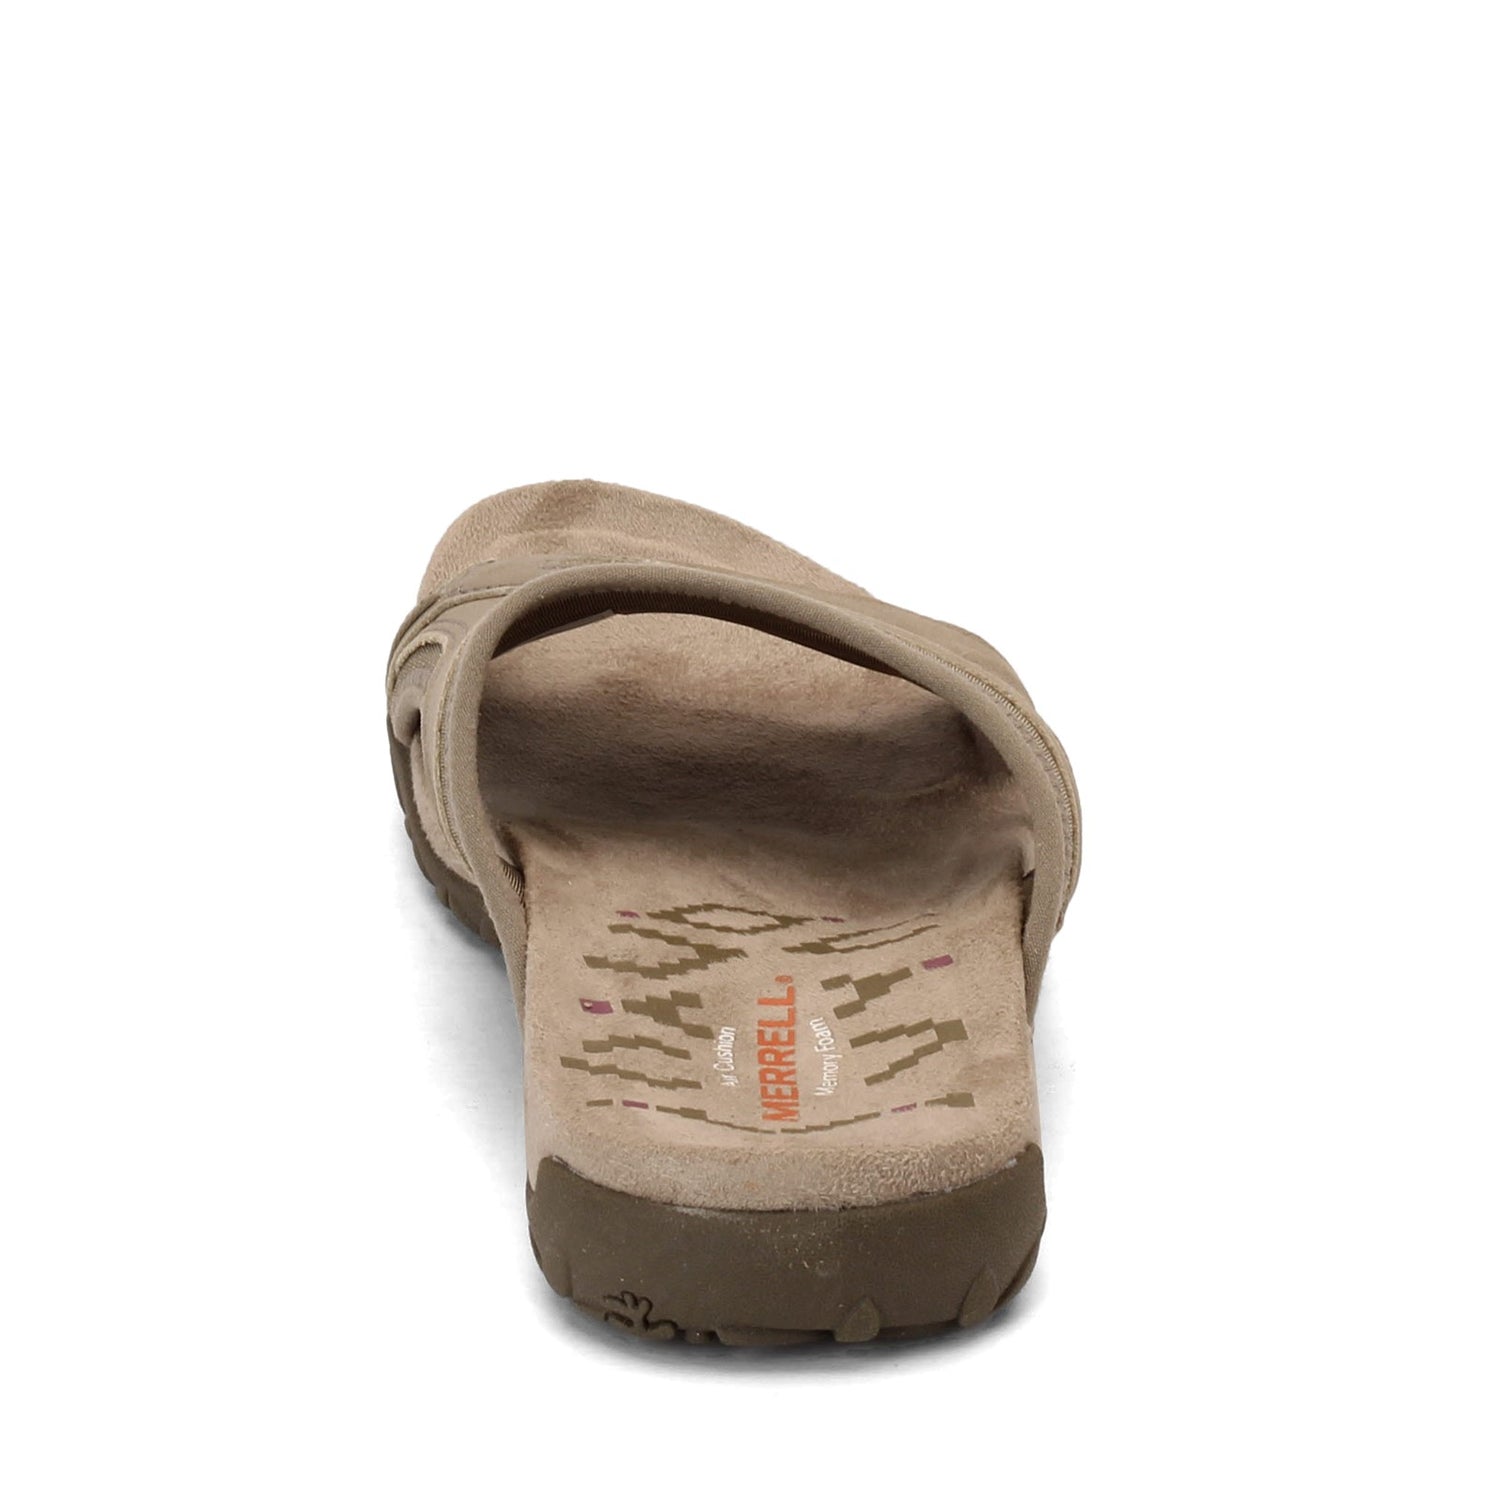 Peltz Shoes  Women's Merrell Terran Slide II Sandal TAUPE J02768